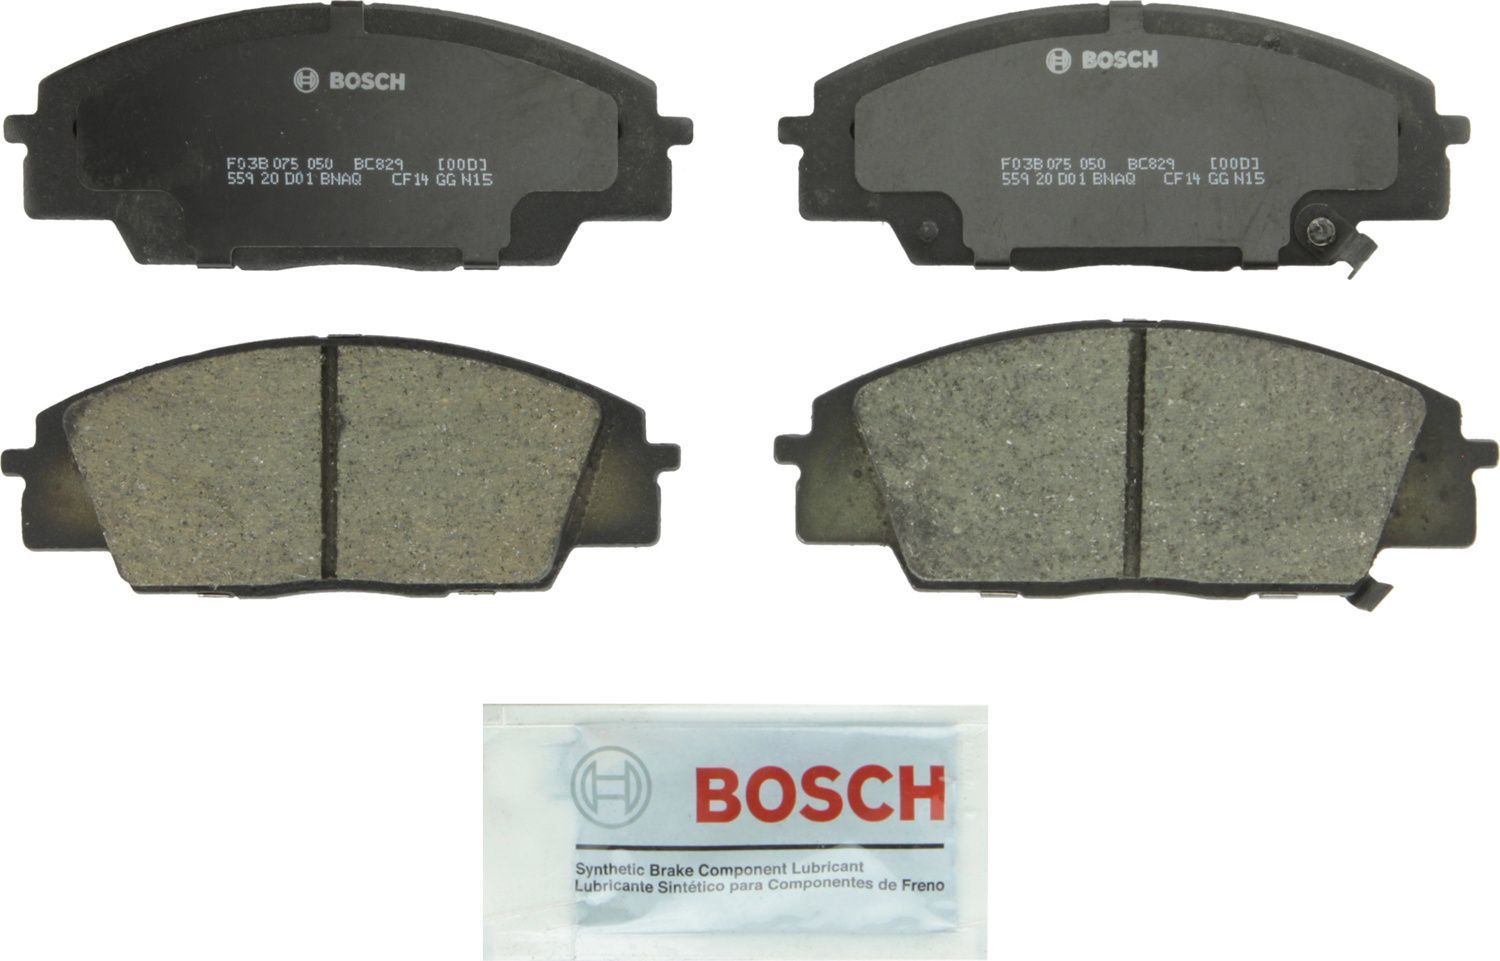 BOSCH BRAKE - Bosch QuietCast Brake Pad Ceramic Brake Pads (Front) - BQC BC829